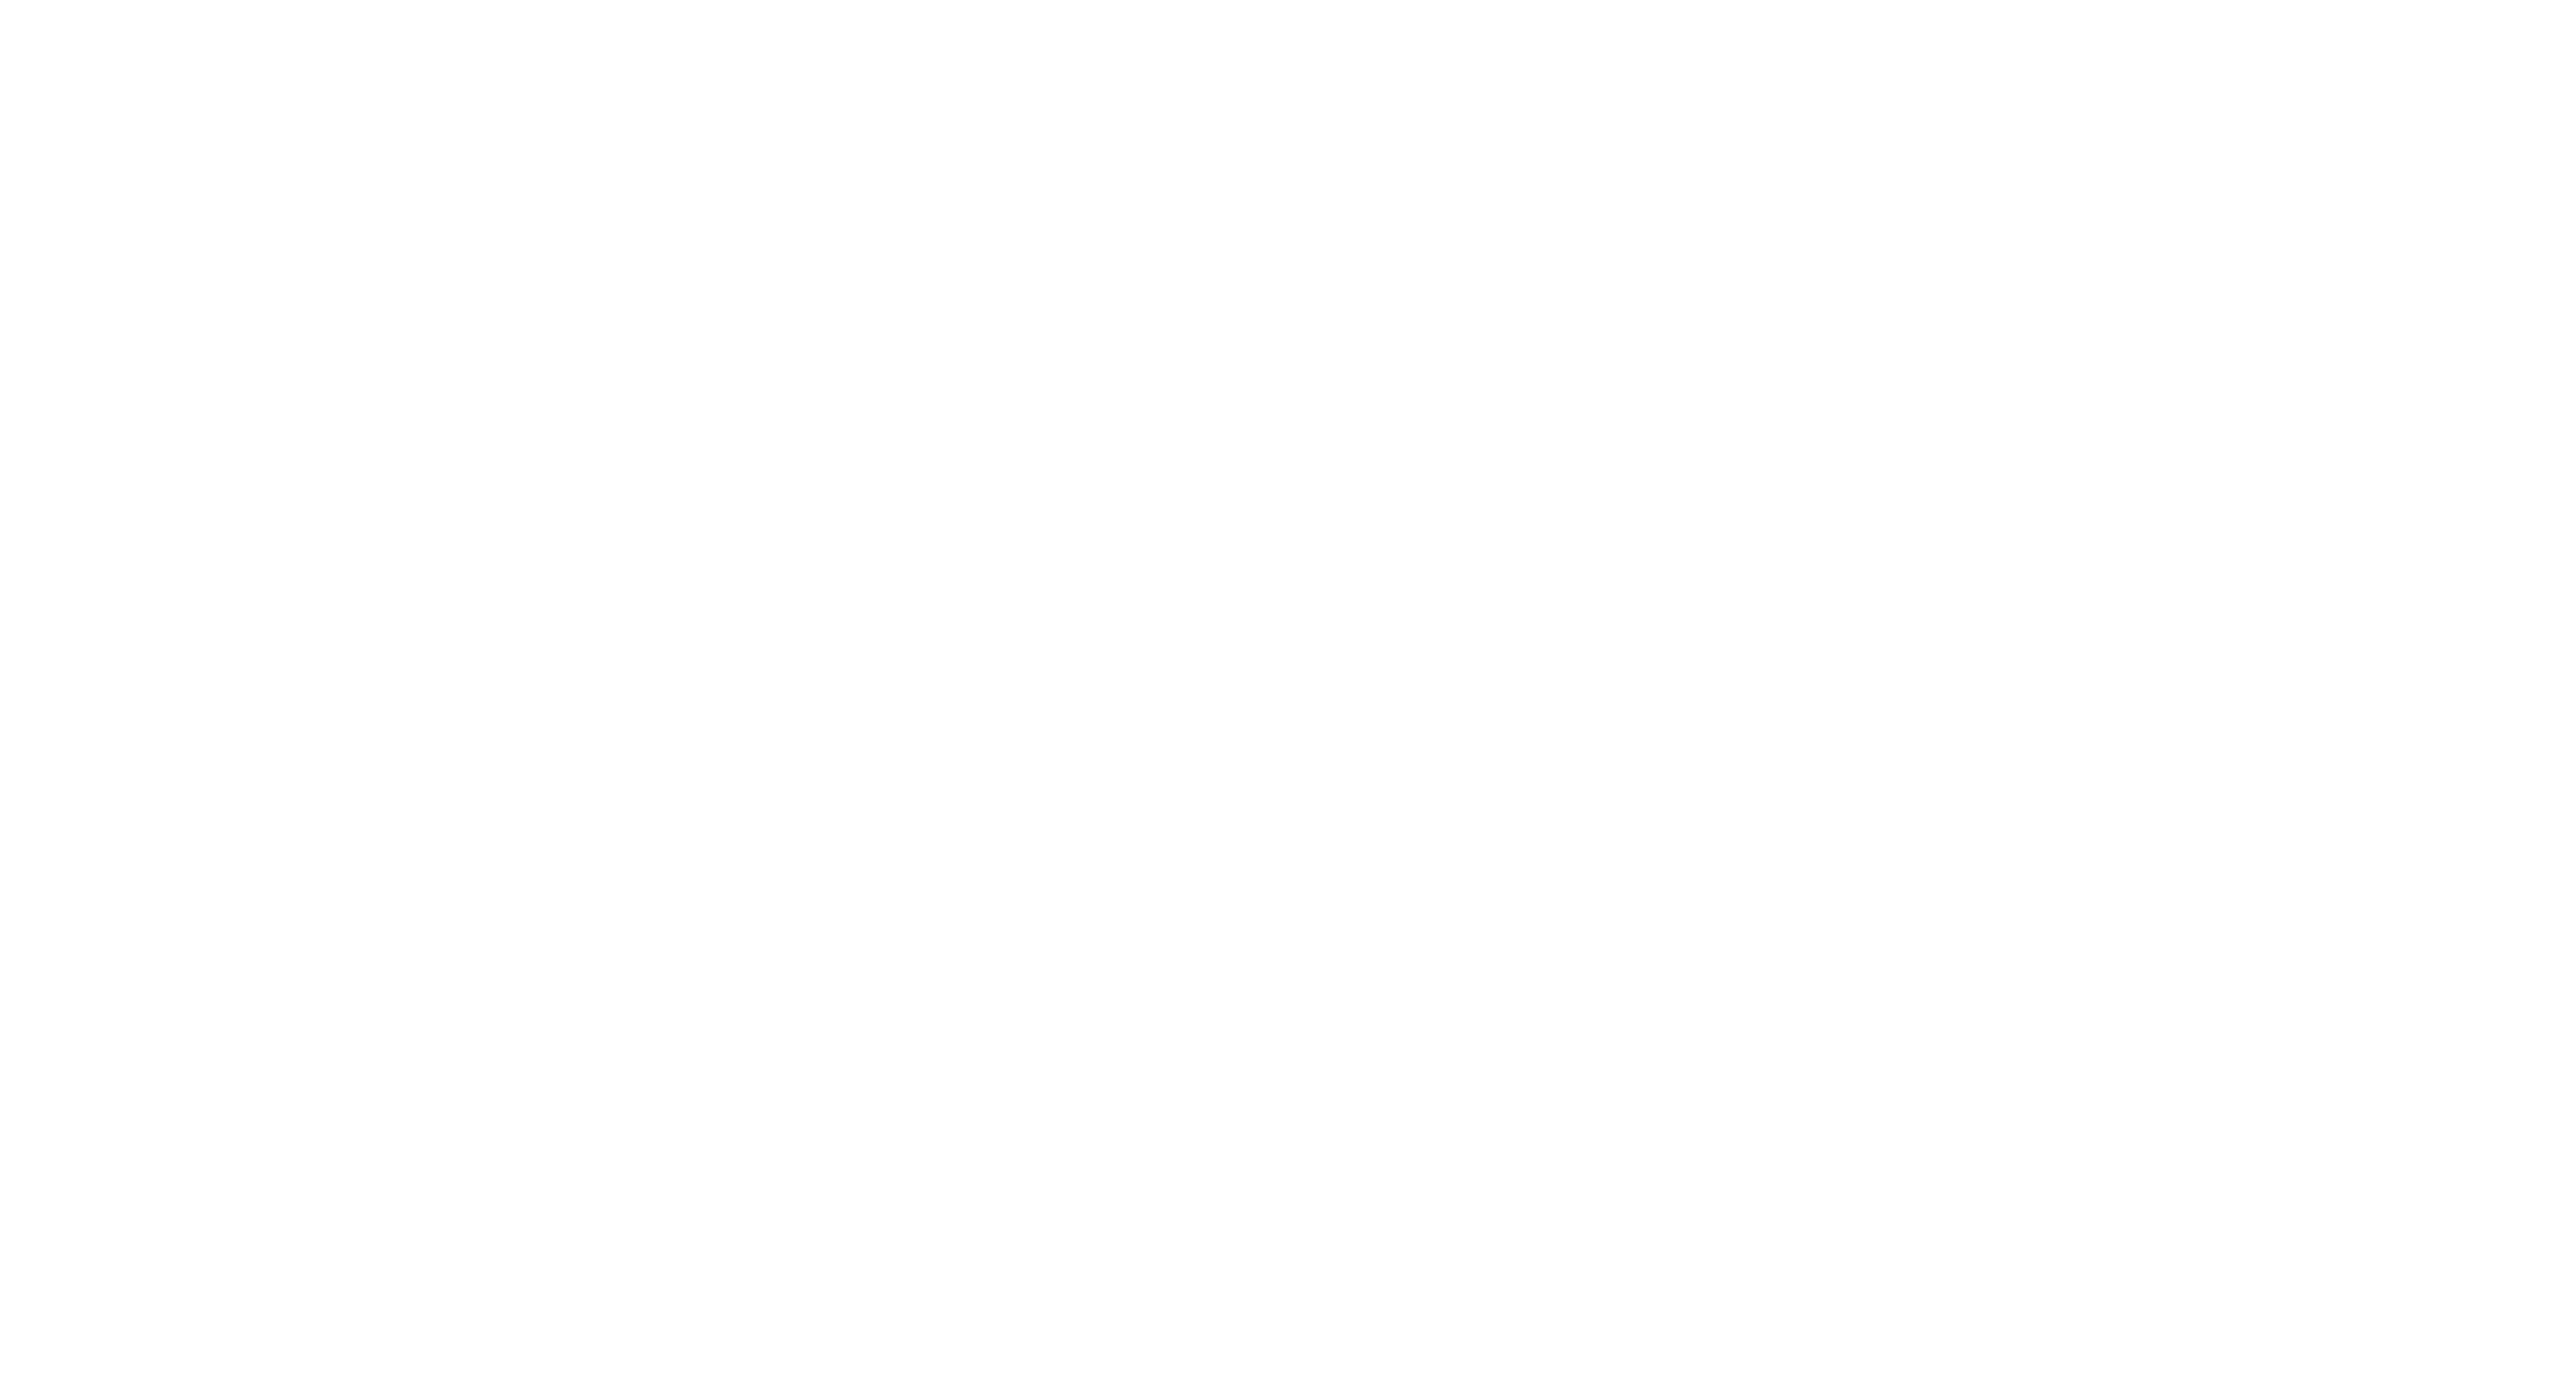 M.K. Unigroup Corporation